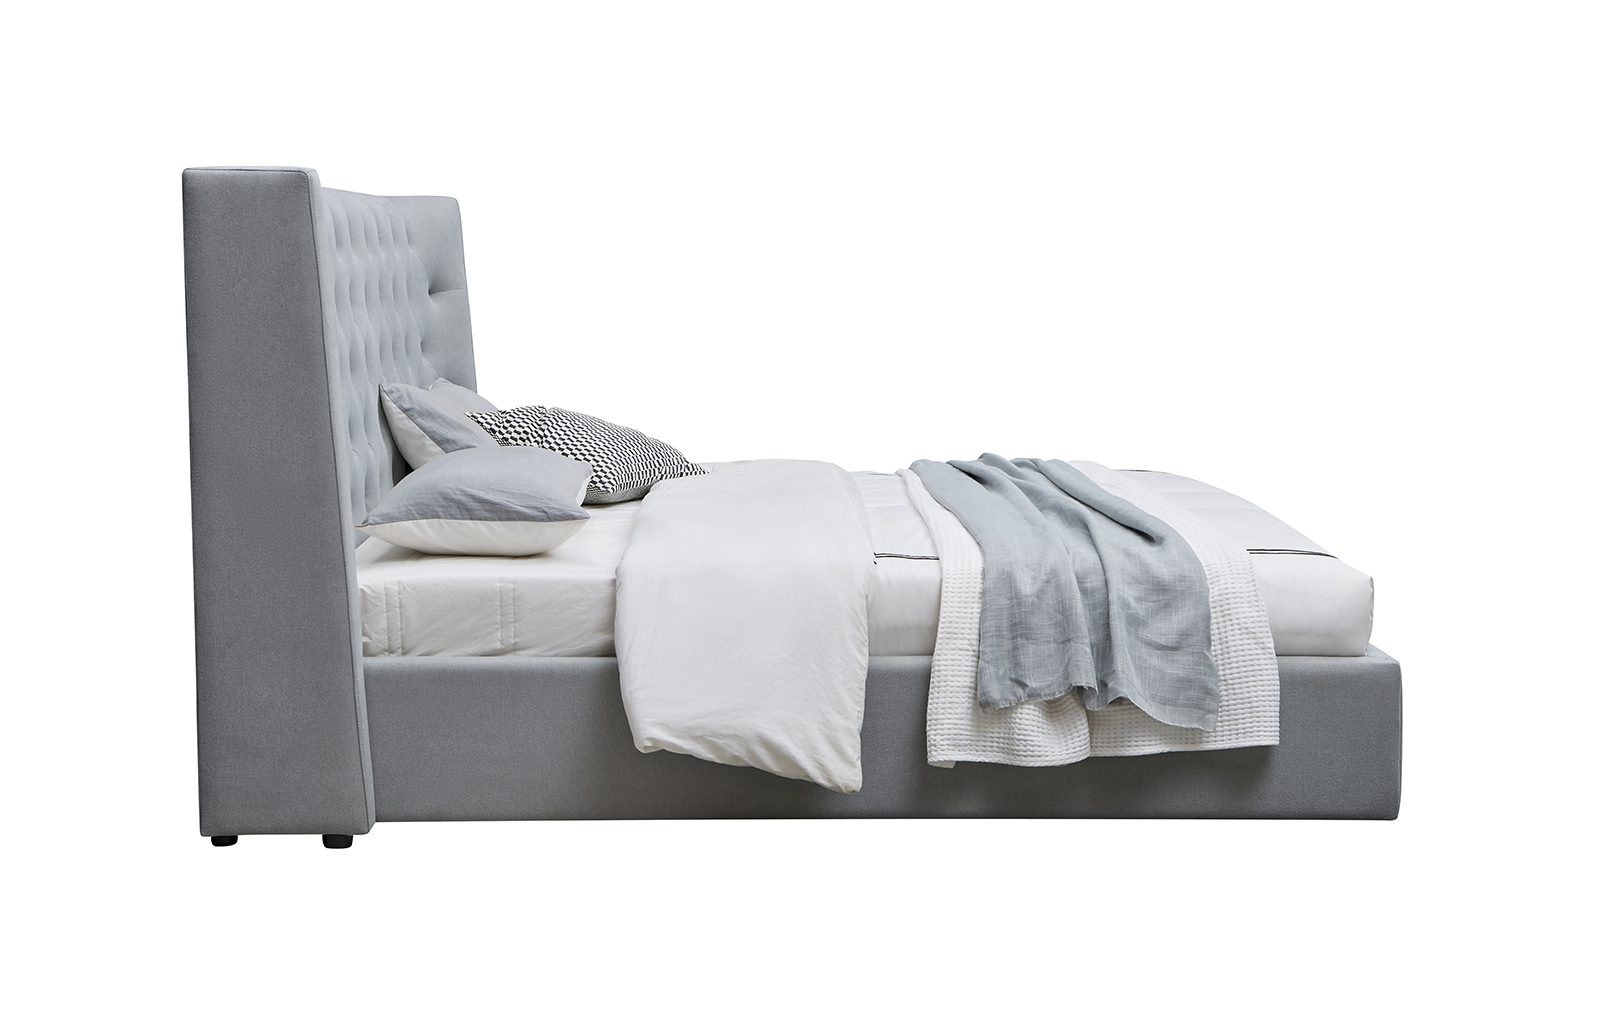 Кровать europe style серый 185.0x127.0x228.0 см.